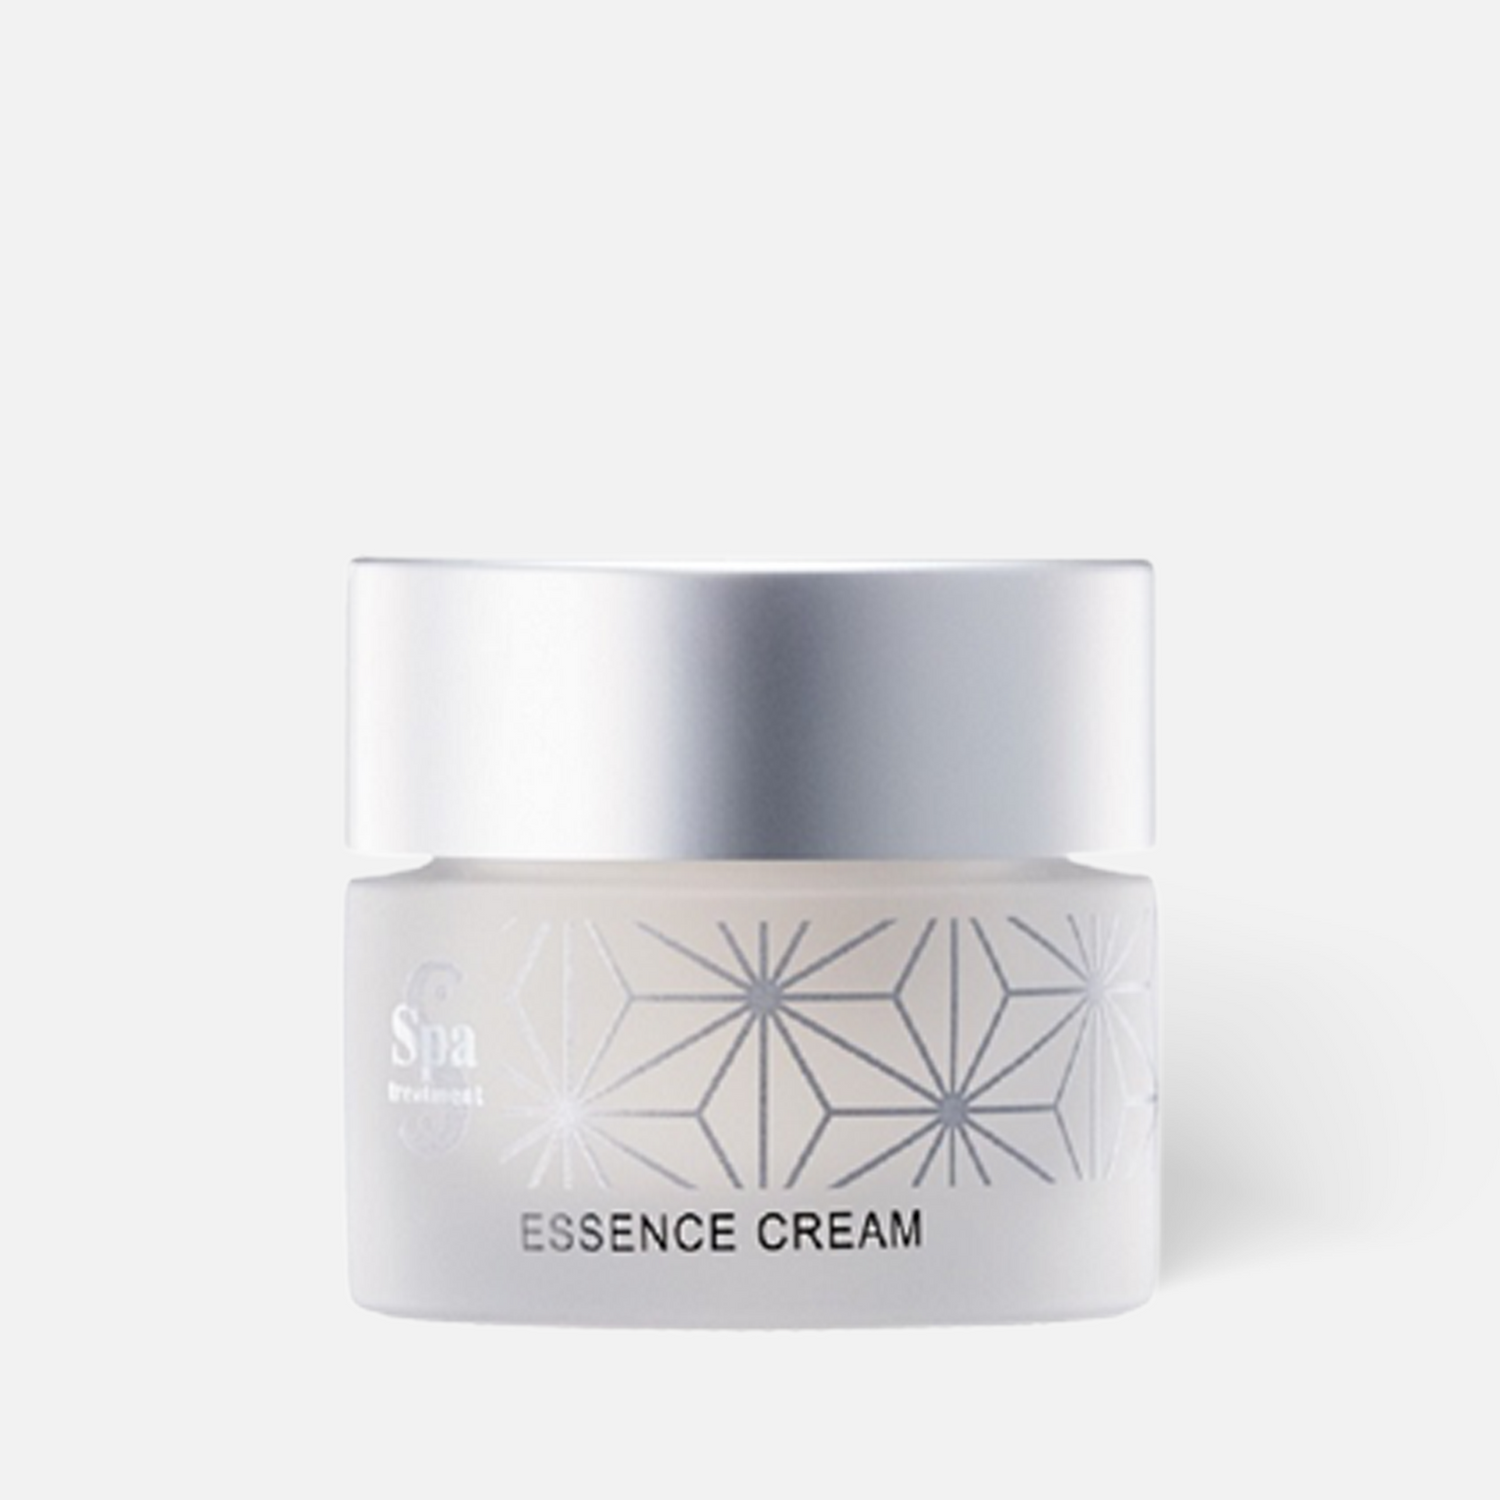 Spa Treatment - Essence Cream - 35g